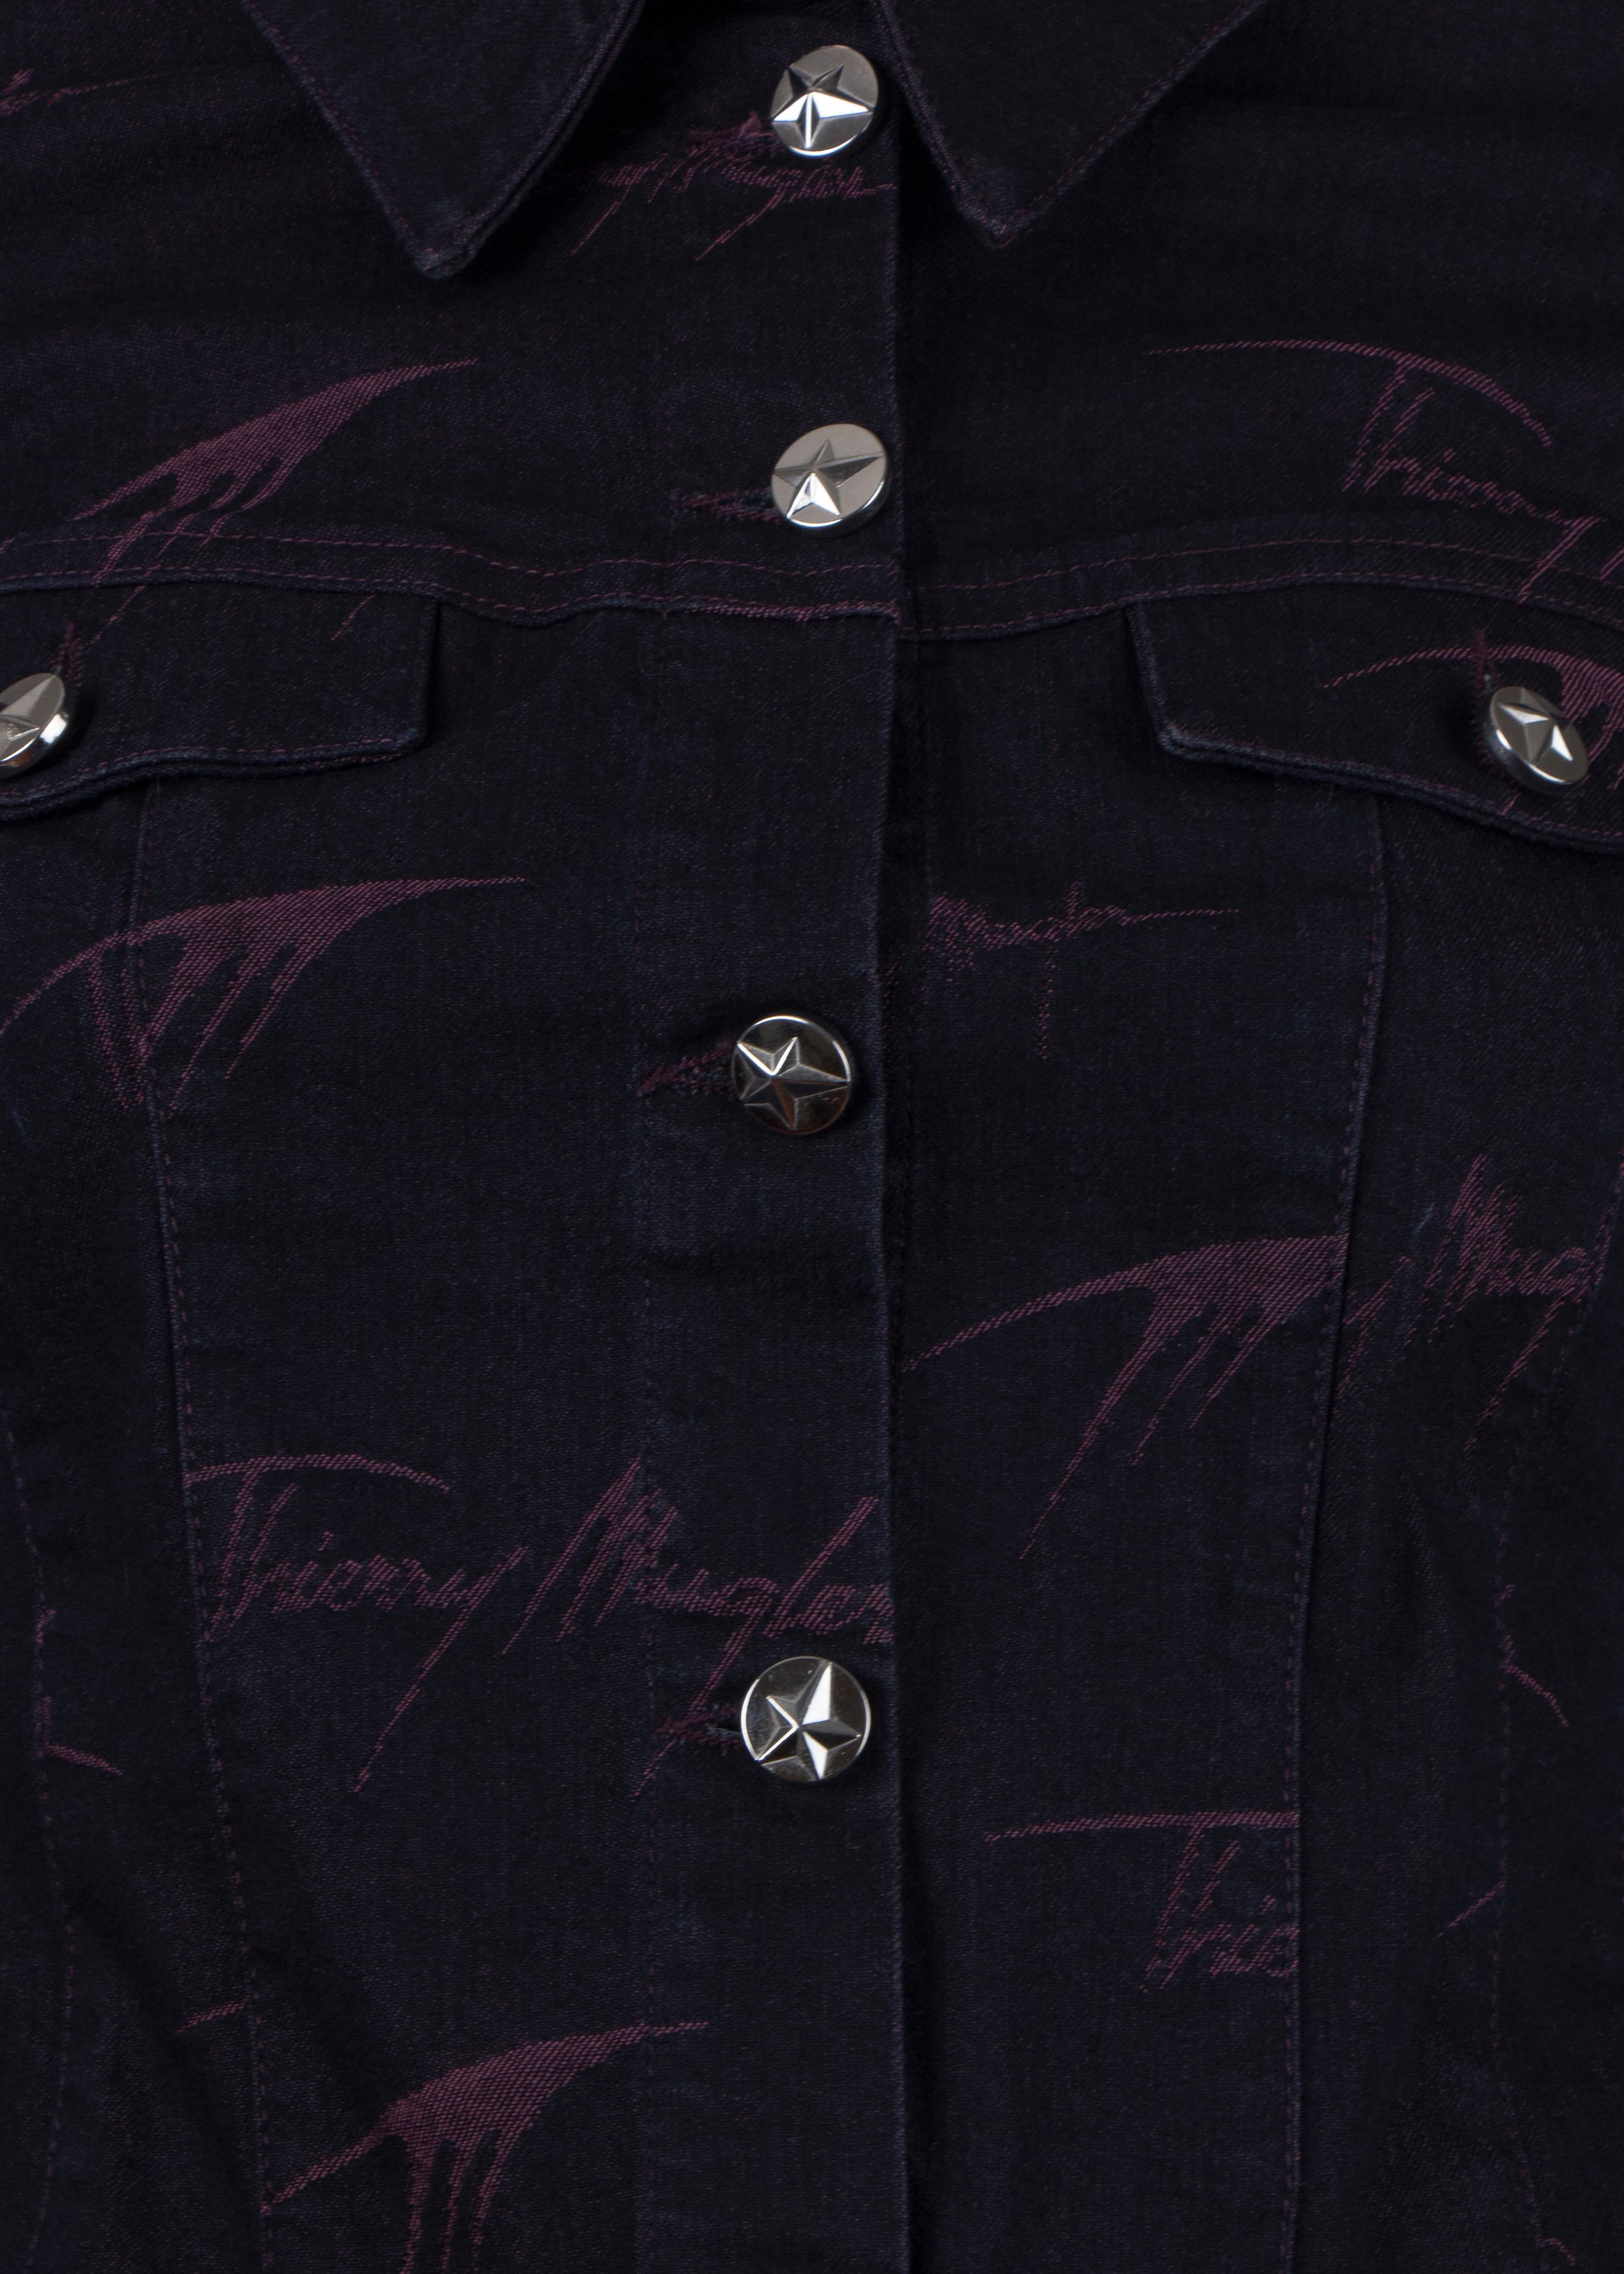 Women's Thierry Mugler monogram denim jacket, c. 1998 For Sale